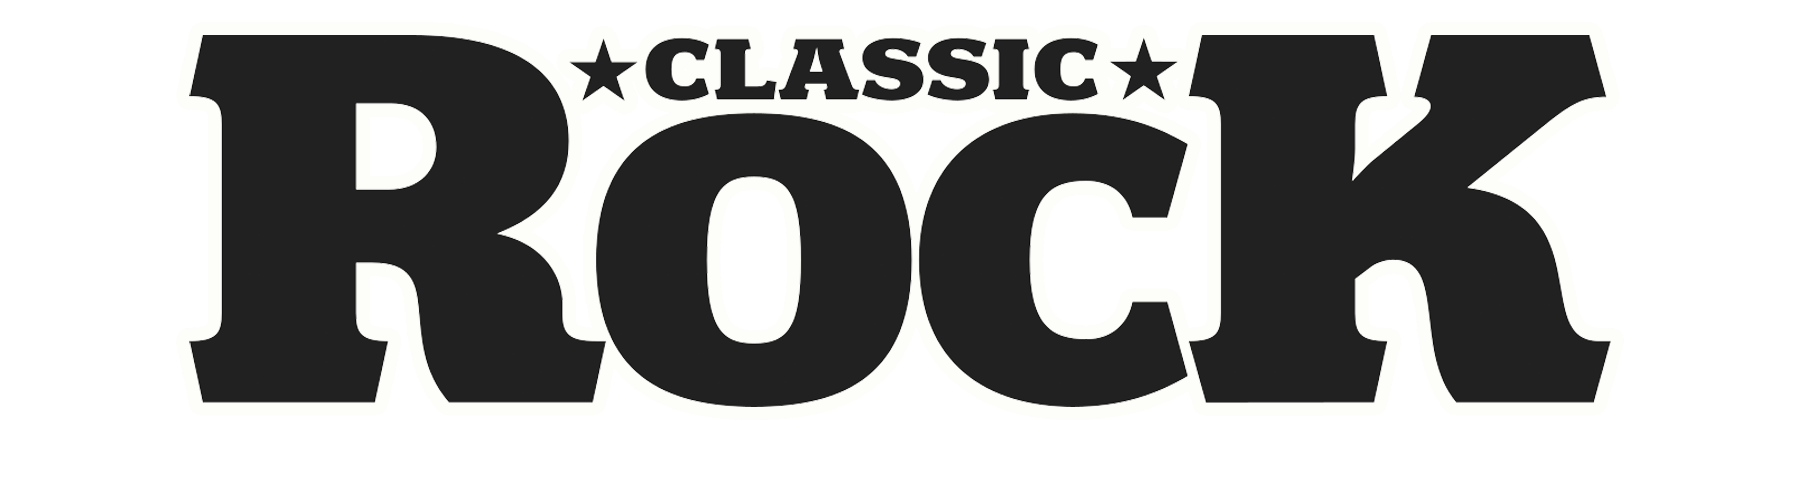 Classic Rock Magazine Review